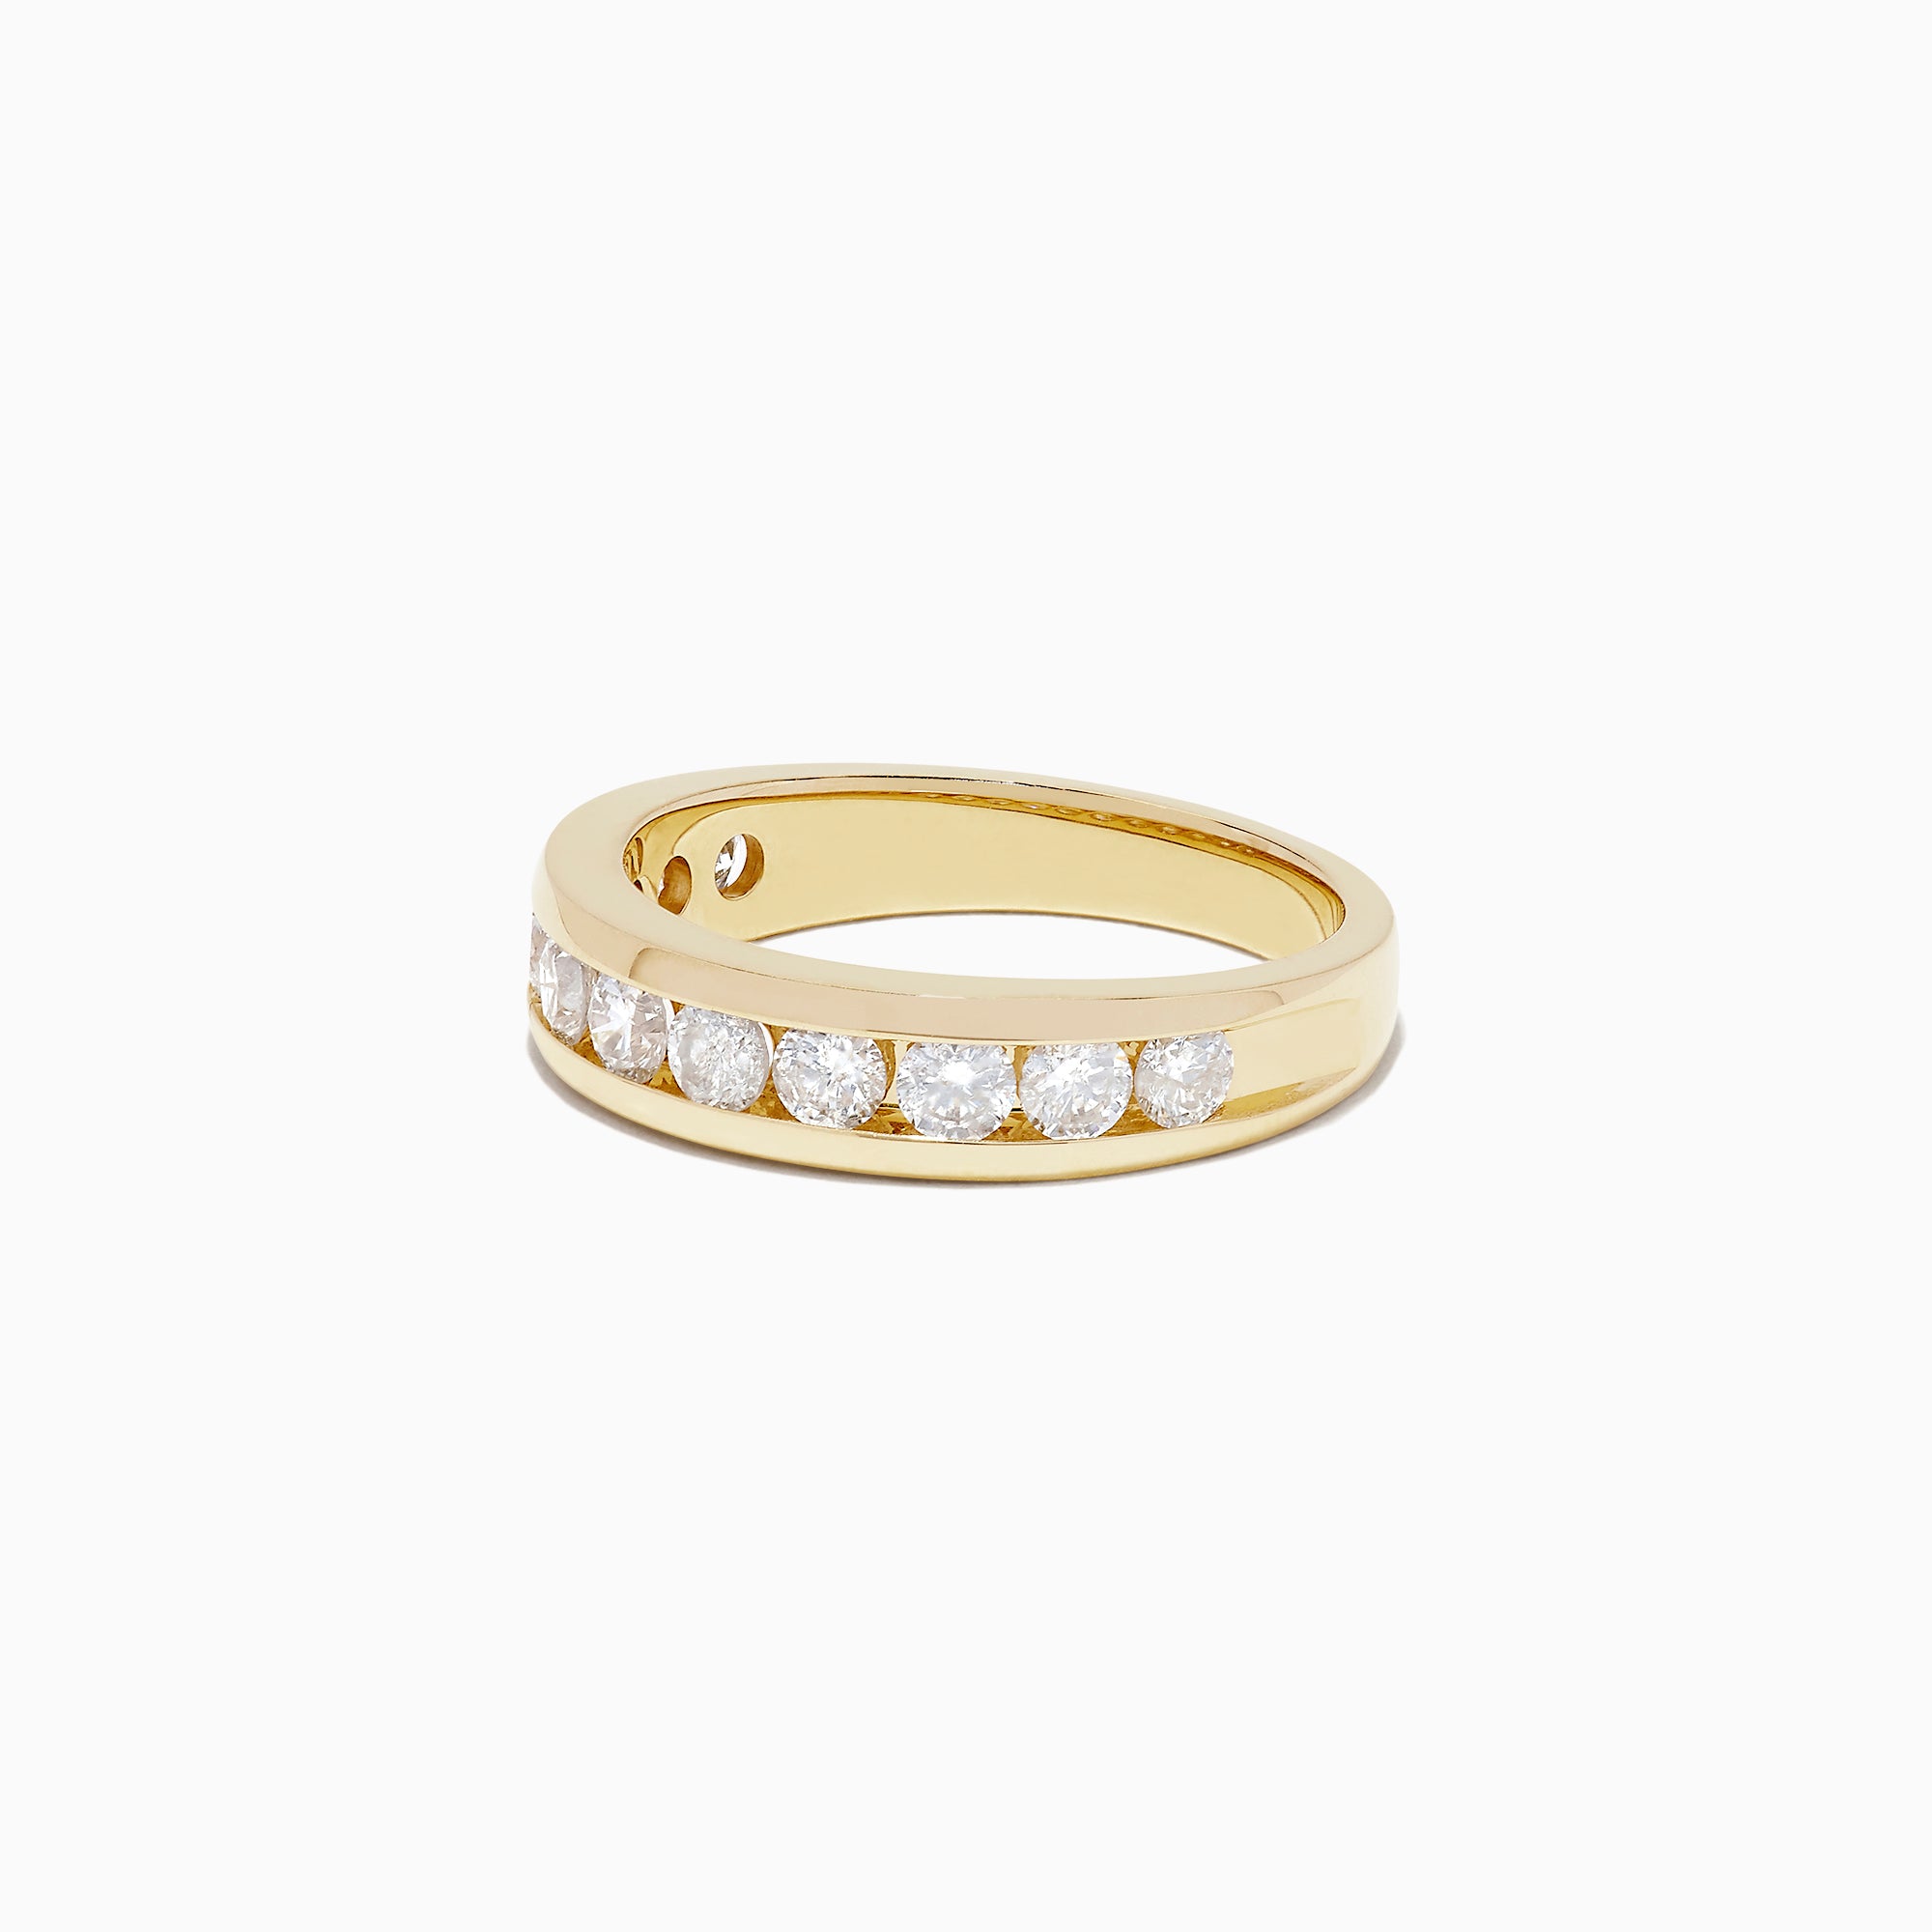 Effy D'Oro 14K Yellow Gold Channel Set Diamond Ring, 0.98 TCW